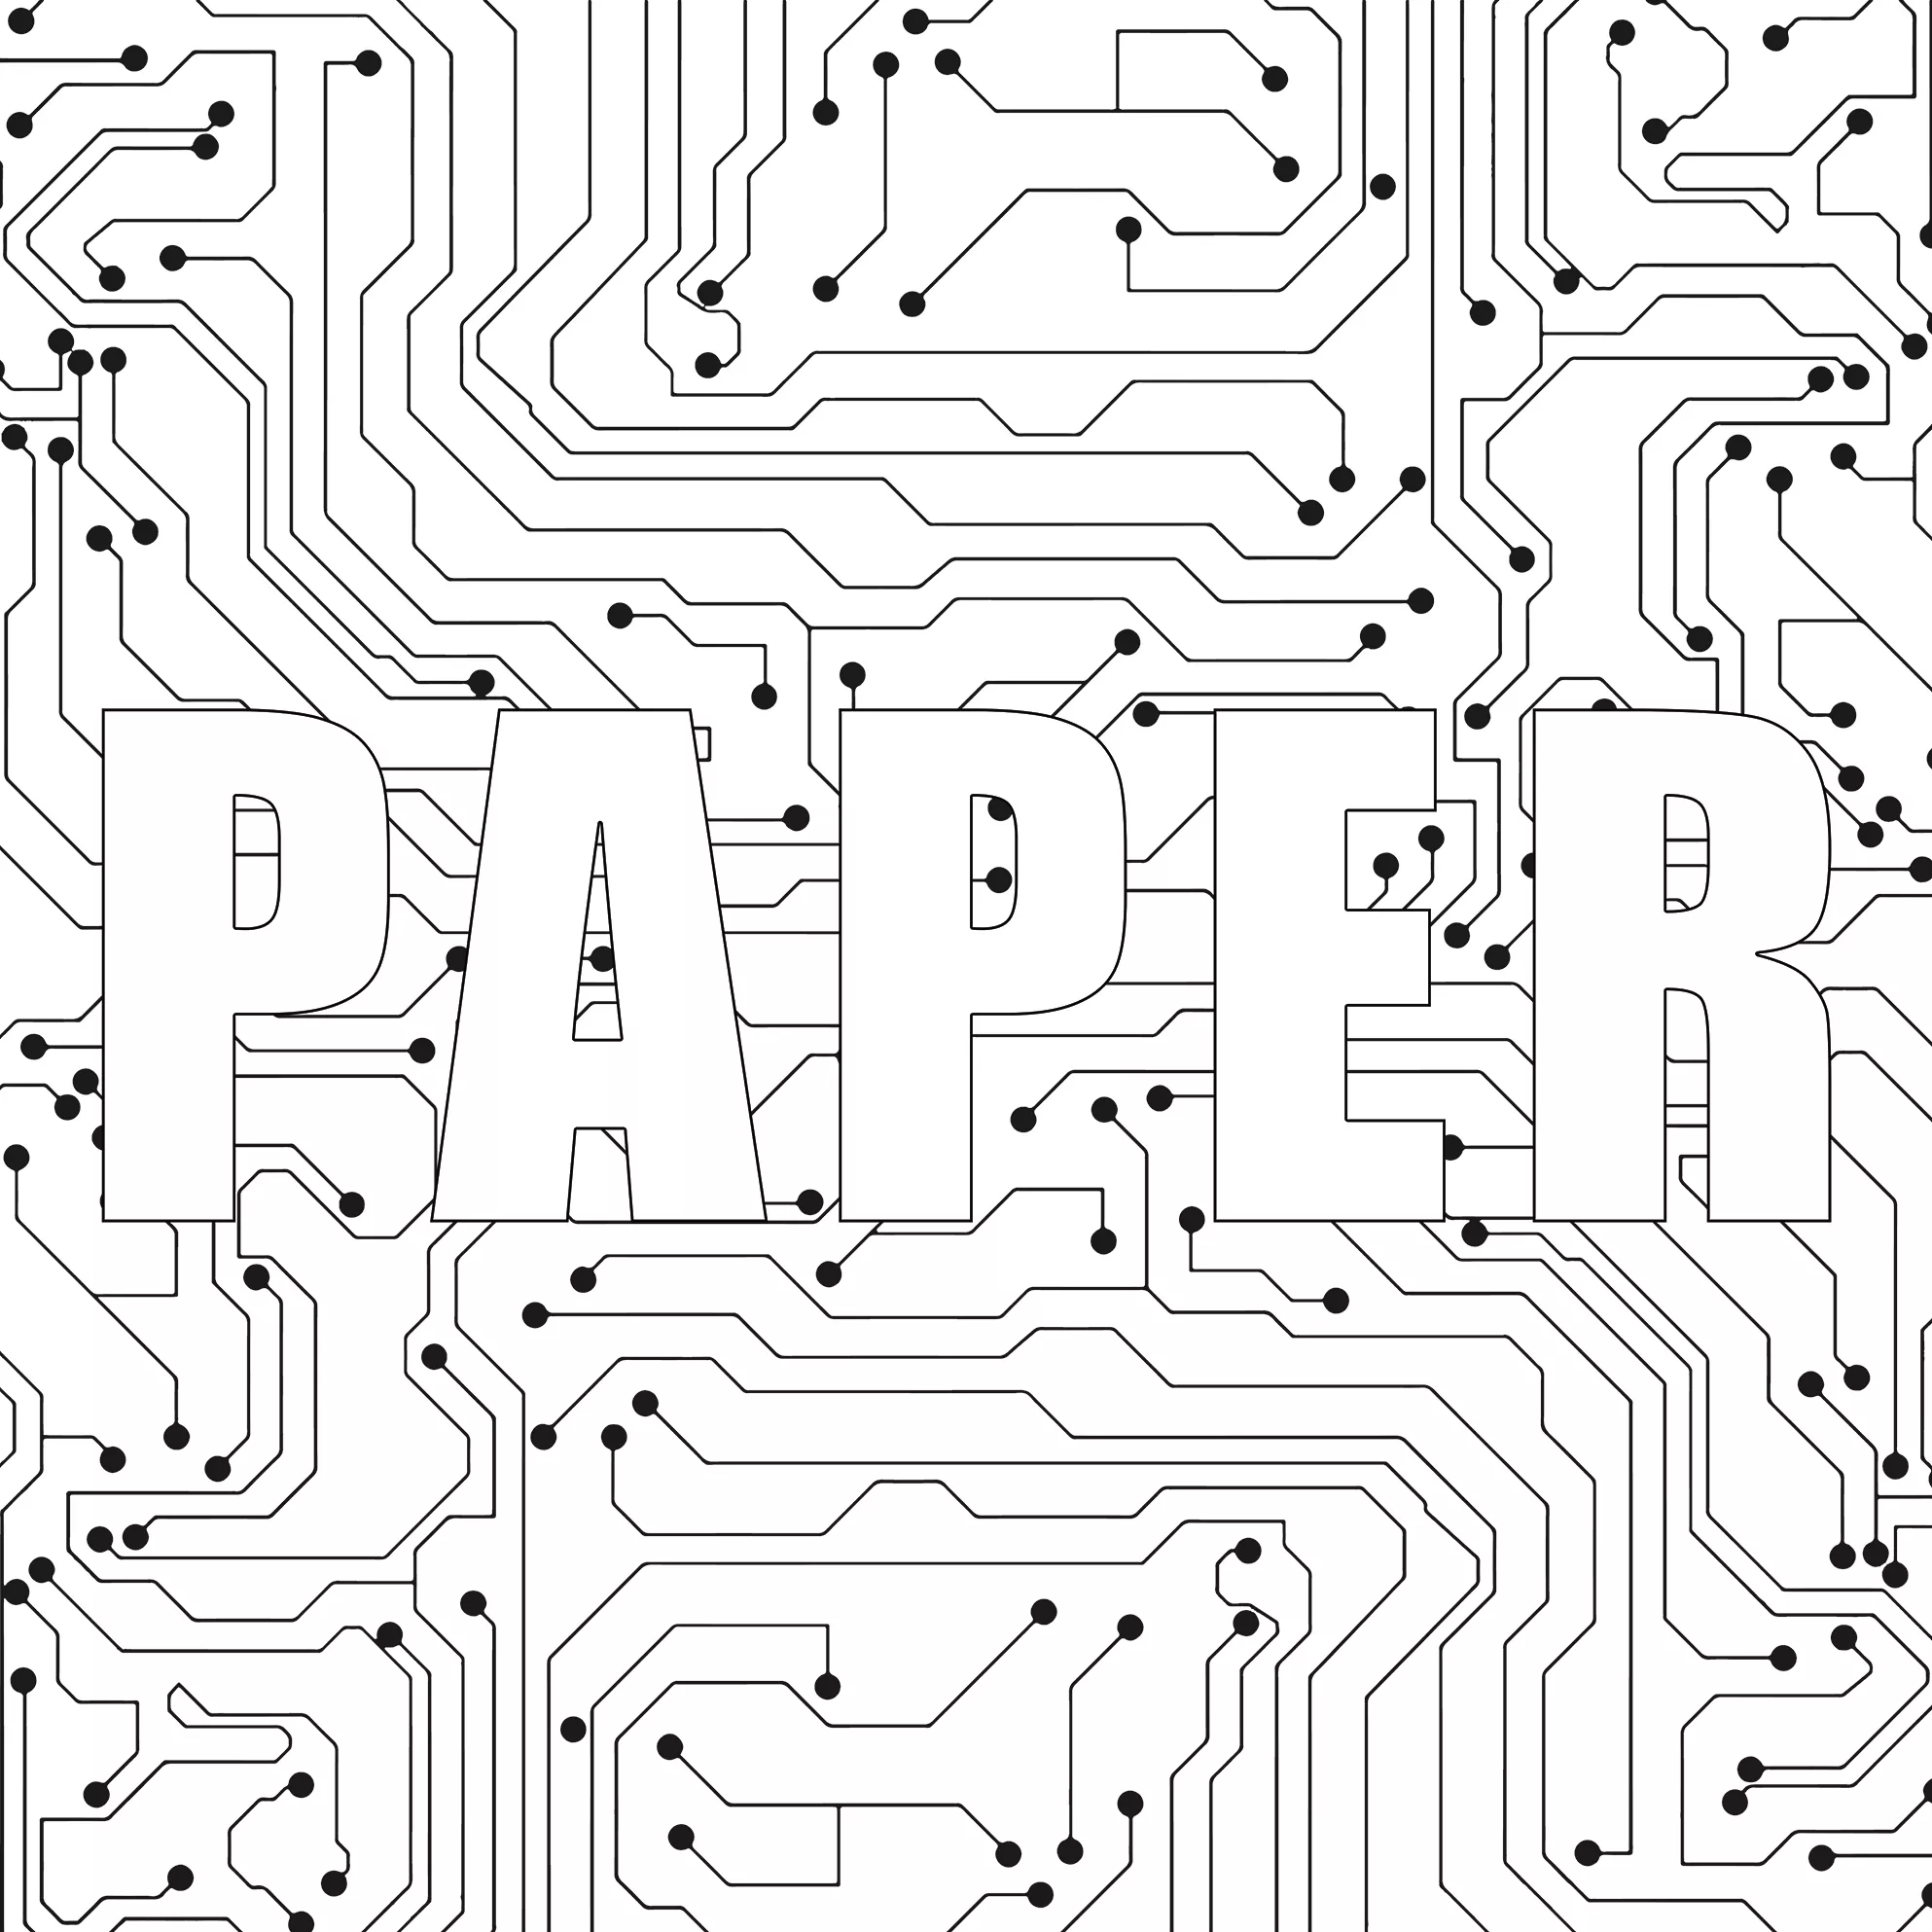 We Design The Future - Paper